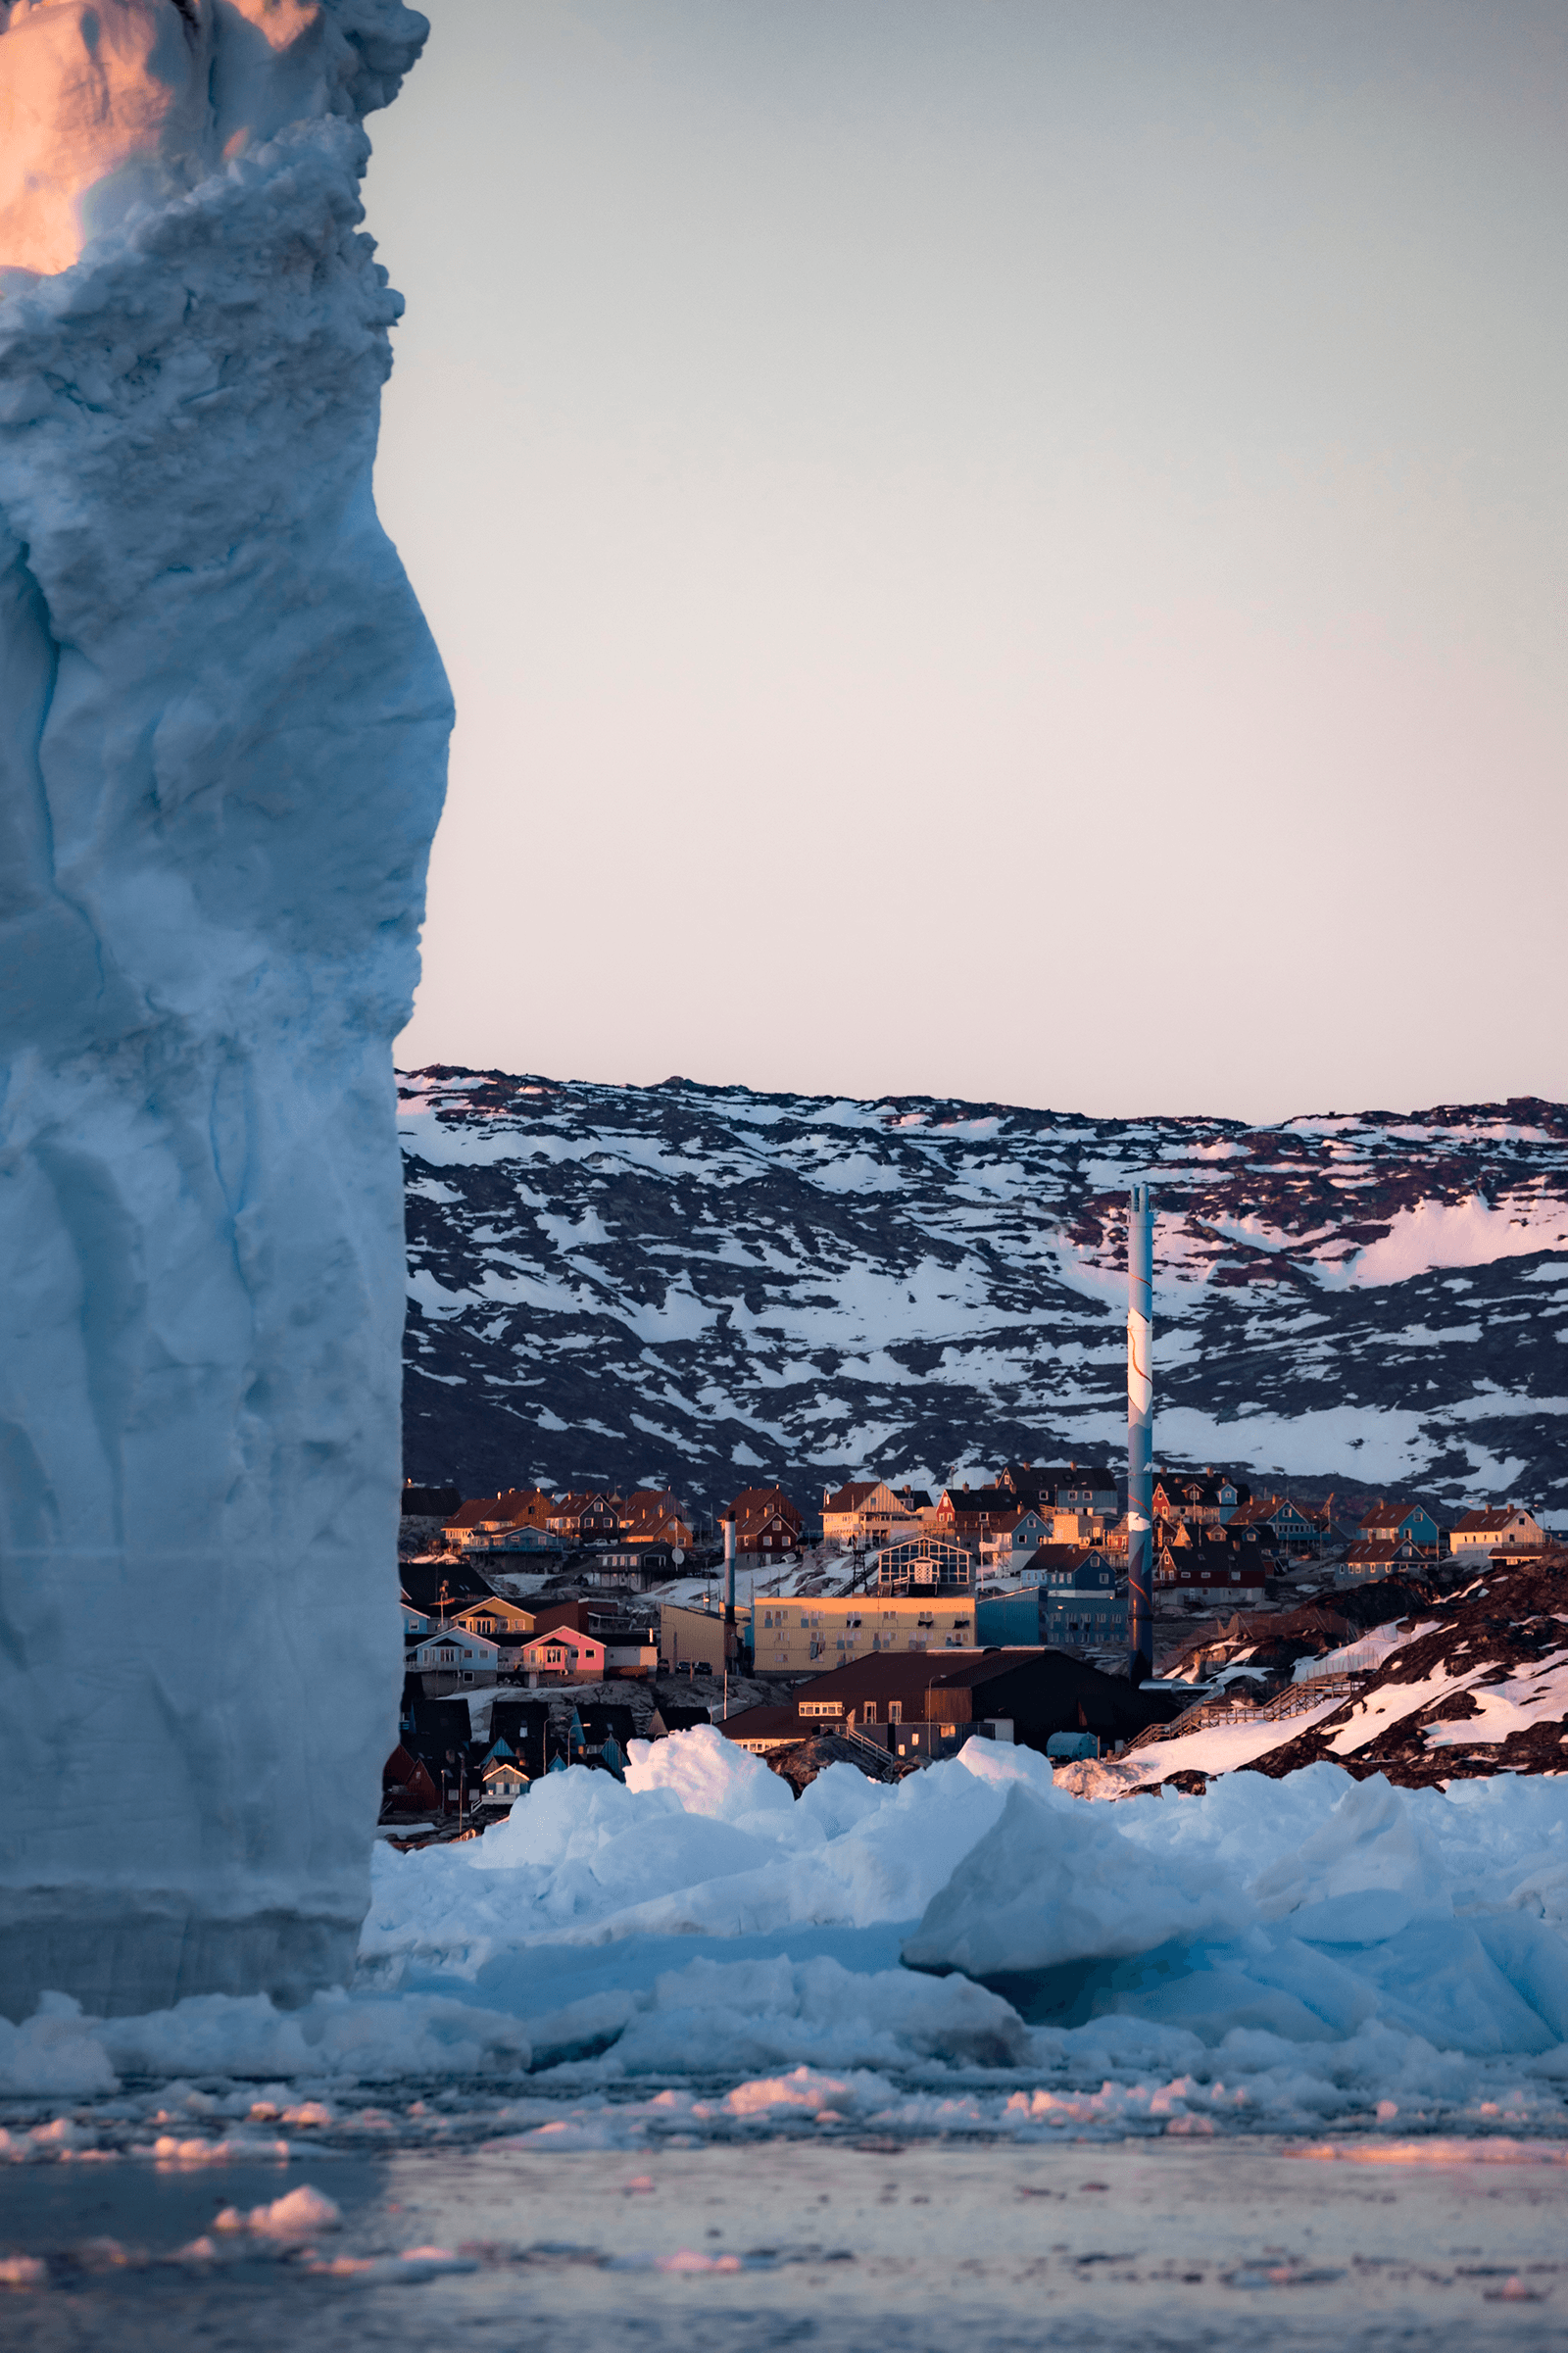 Nukissiorfiit in Ilulissat with huge iceberg. Photo by Aningaaq R Carlsen - Visit Greenland